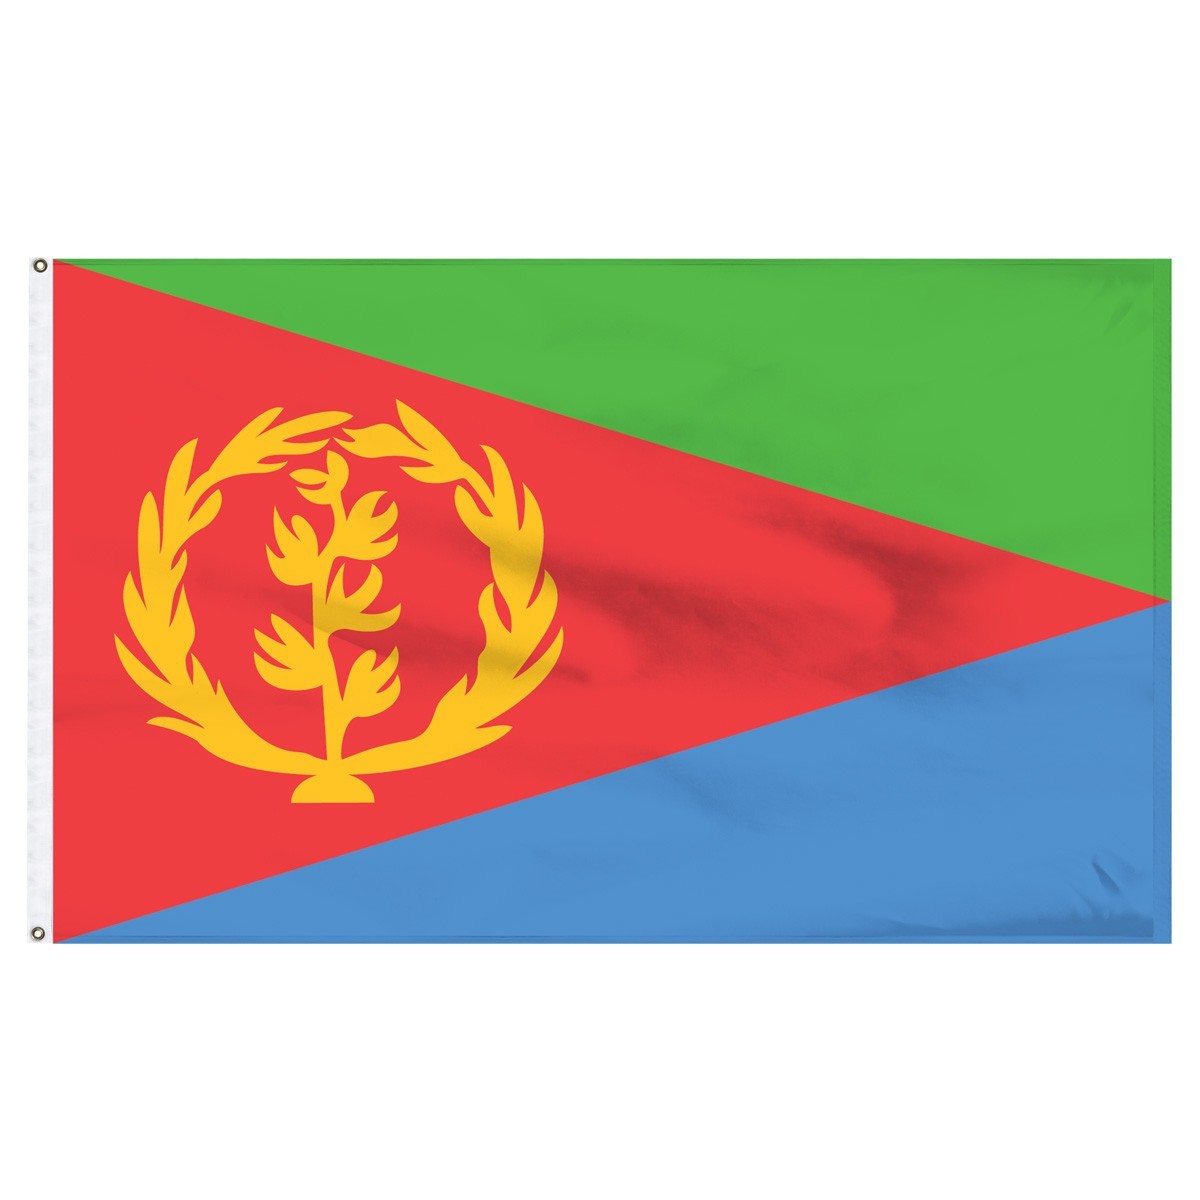 Eritrea 3' x 5' Outdoor Nylon Flag